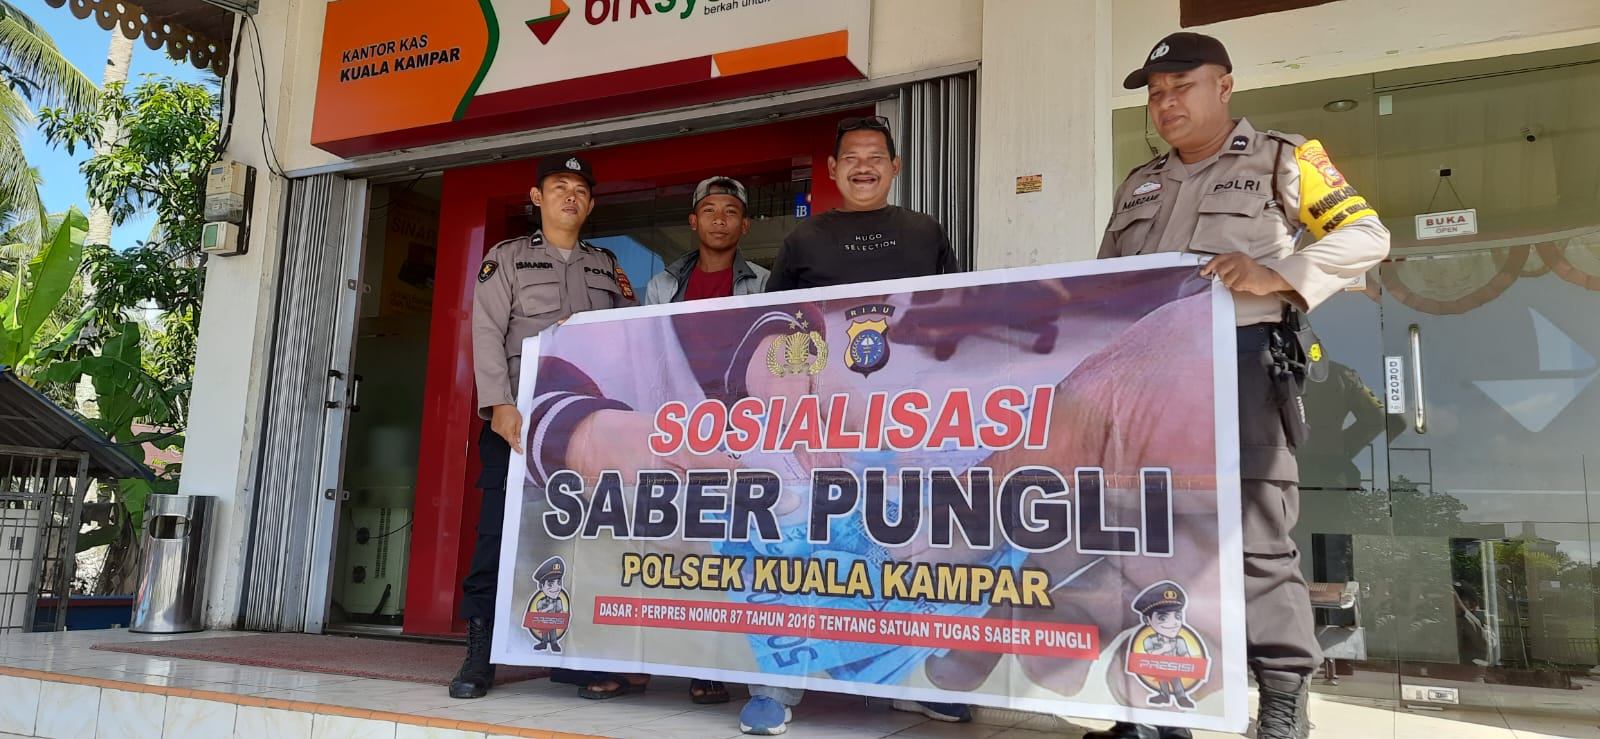 Tiga Personil Polsek Kuala Kampar  Sosialisasi  Satgas Saber Pungli  Di Bank Riau